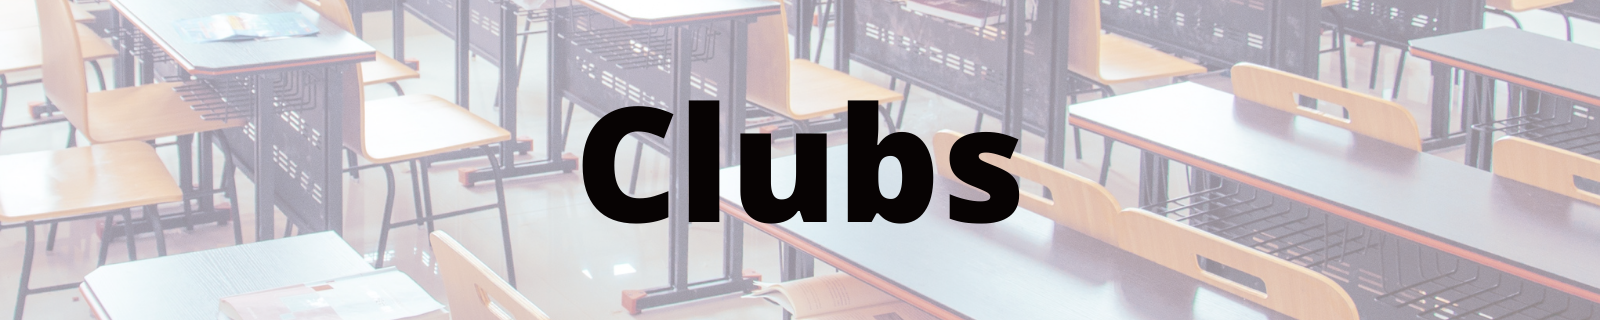 header that reads "clubs"